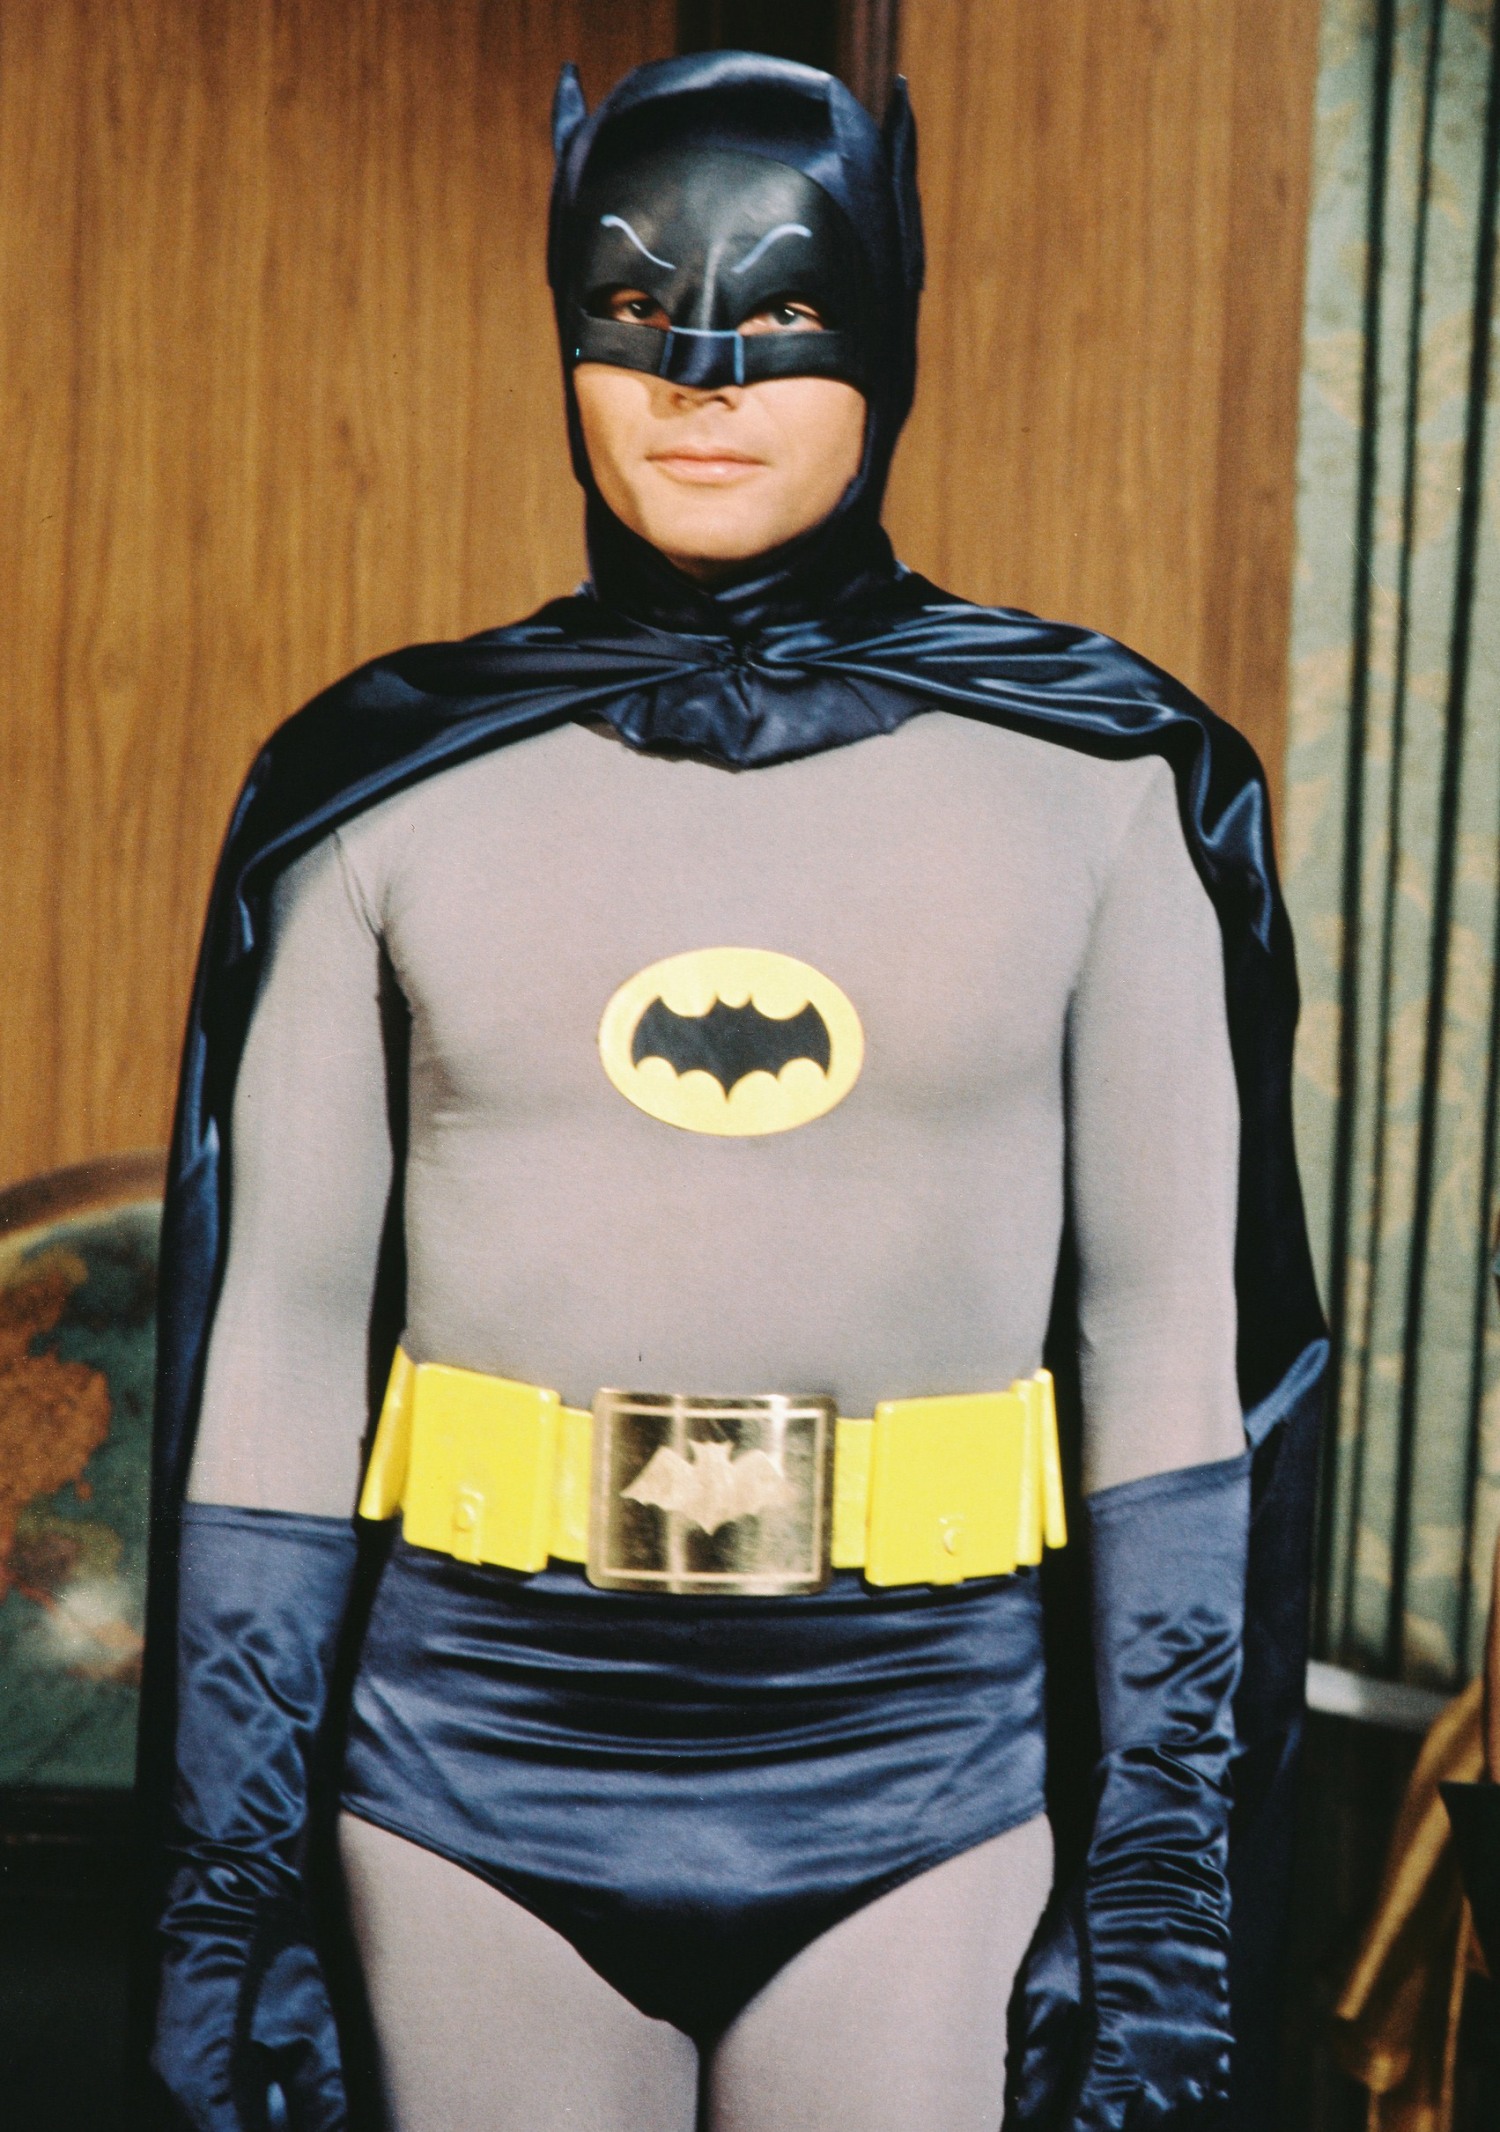 delen Ellende Afgeschaft Adam West, the Actor Who Played 'Batman' in 1960s TV Series, Dies at 88